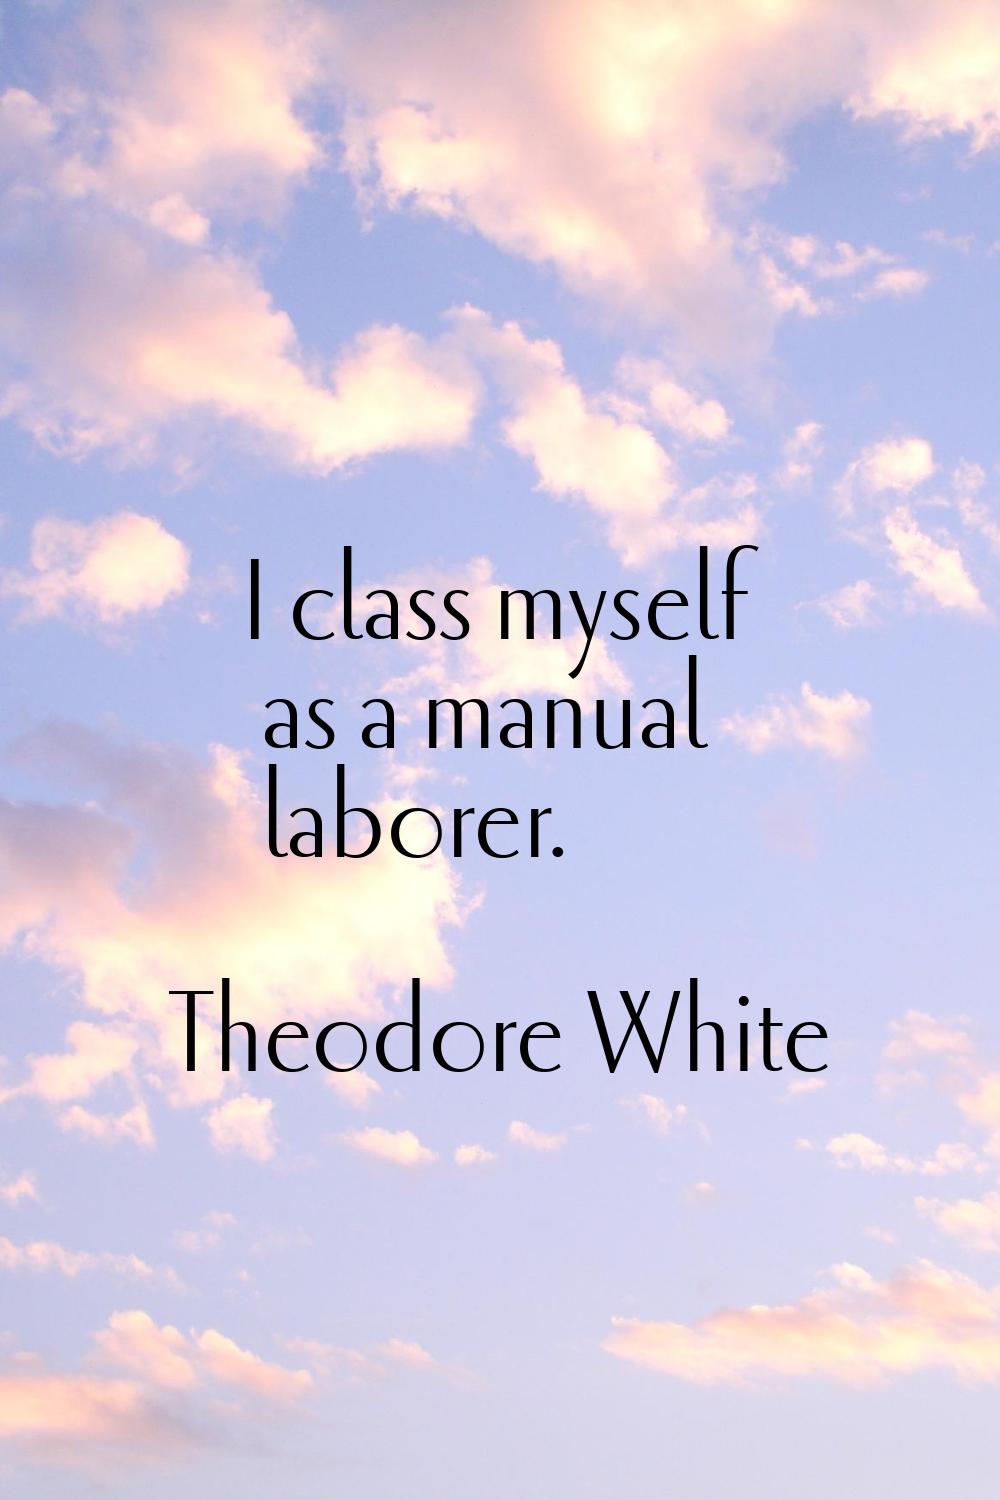 I class myself as a manual laborer.